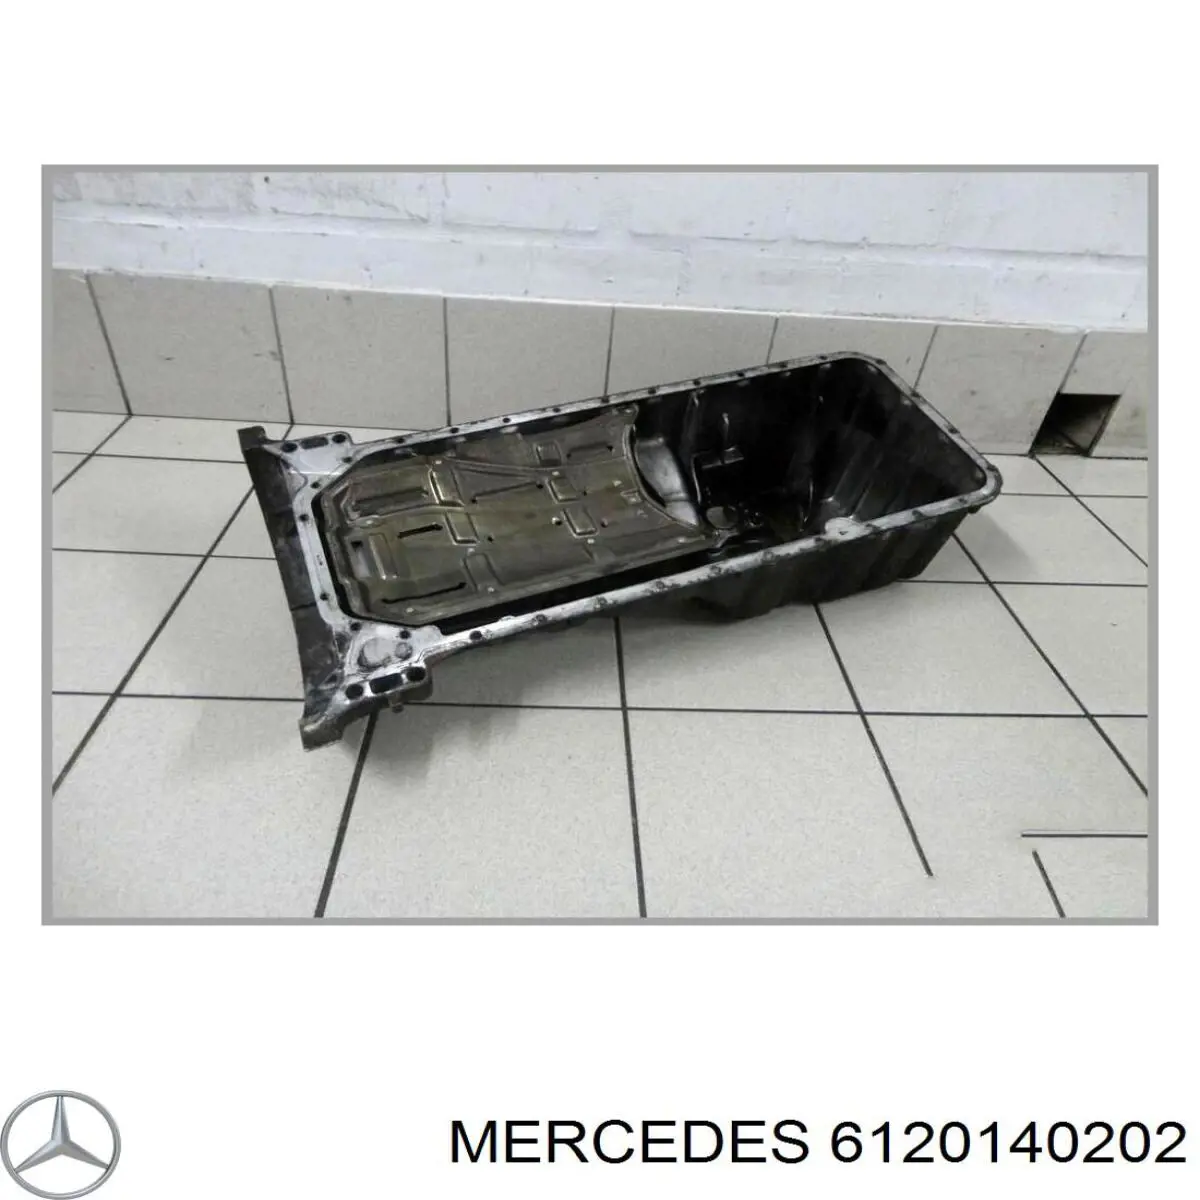 A6120140902 Mercedes піддон масляний картера двигуна